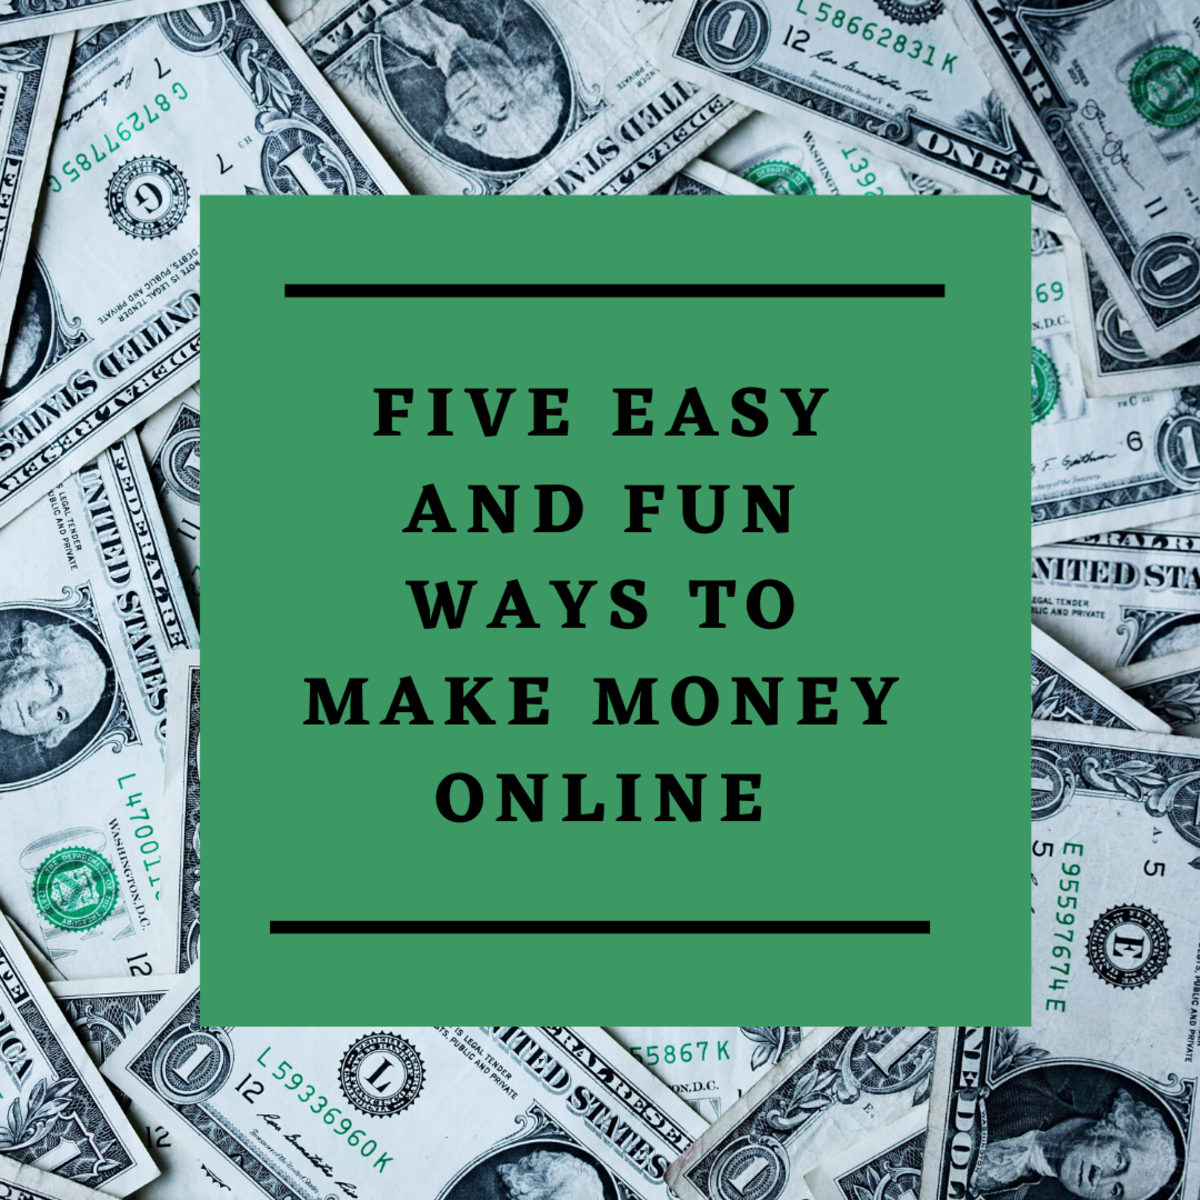 Easy Make Money Online Money Make Ways Easy Fun Five Learn Extra Read